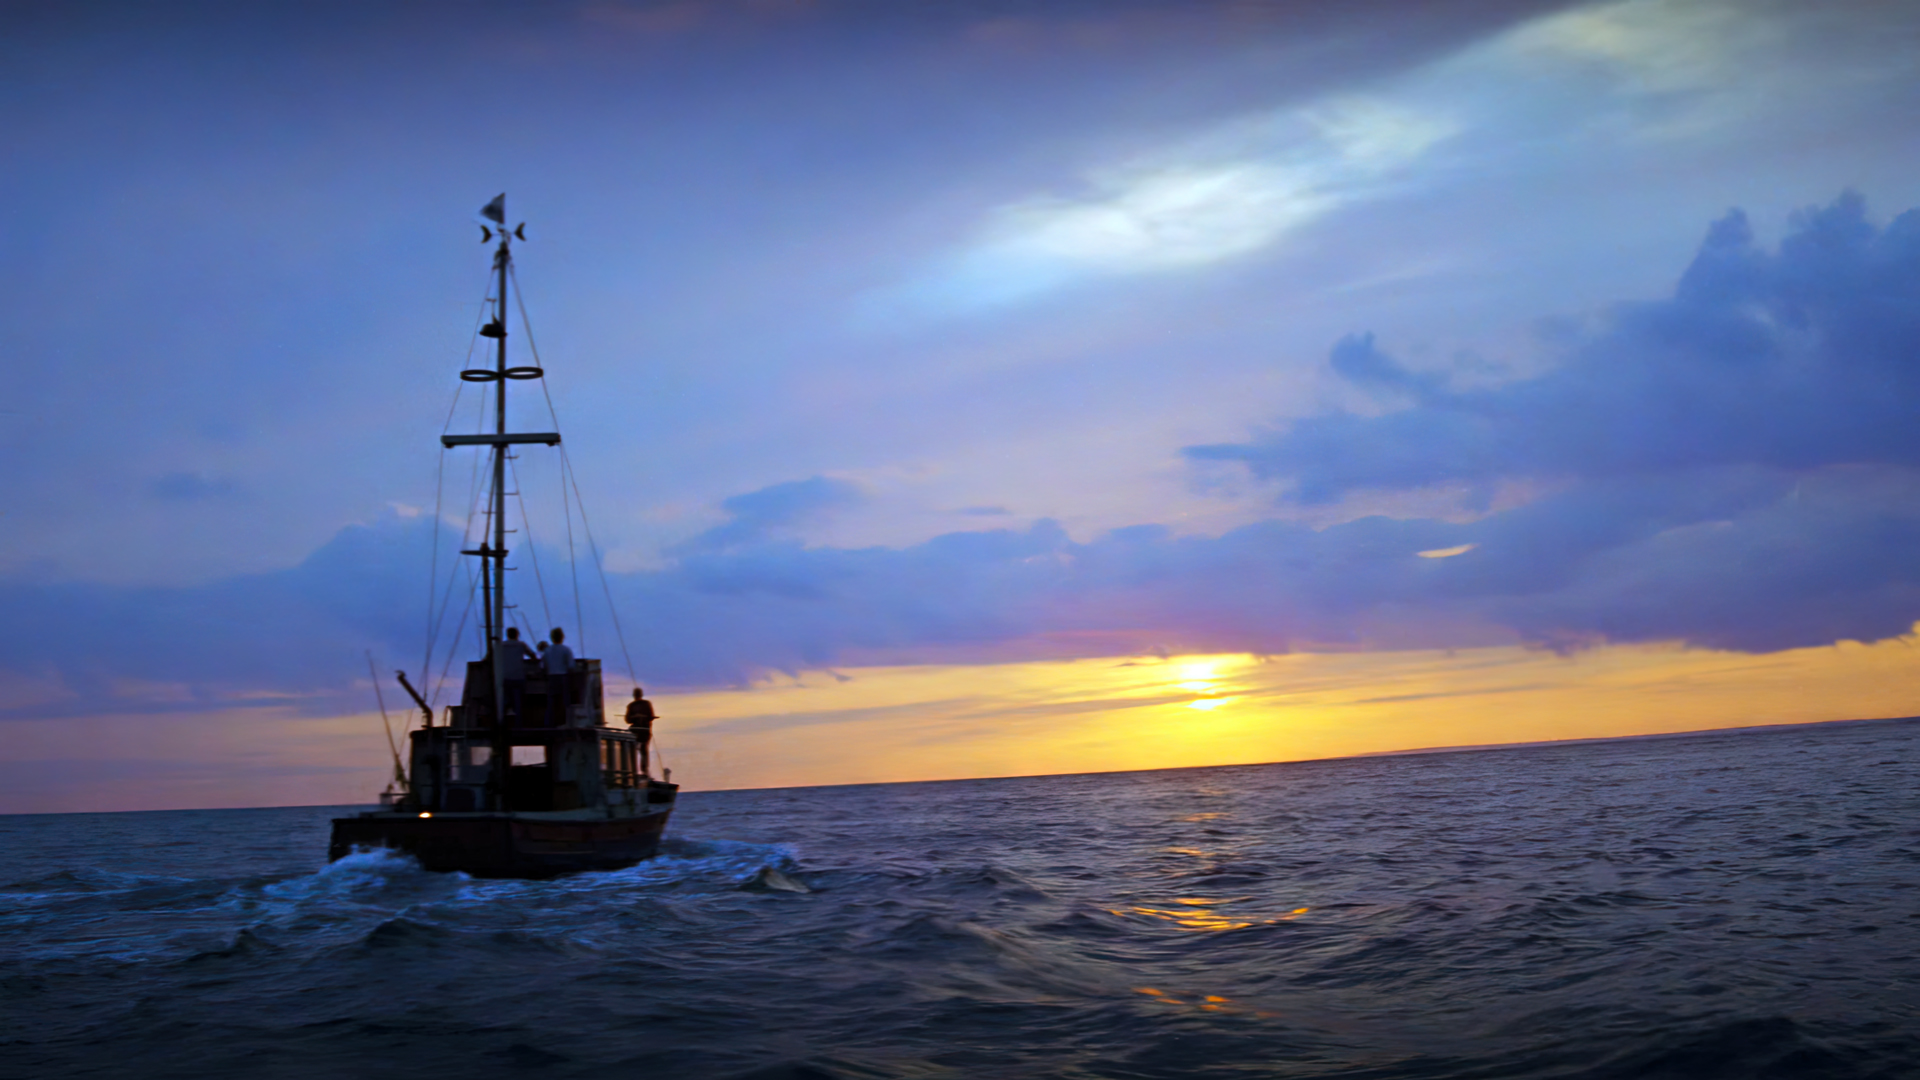 General 1920x1080 Jaws movies film stills sea Steven Spielberg boat water sunset clouds sky